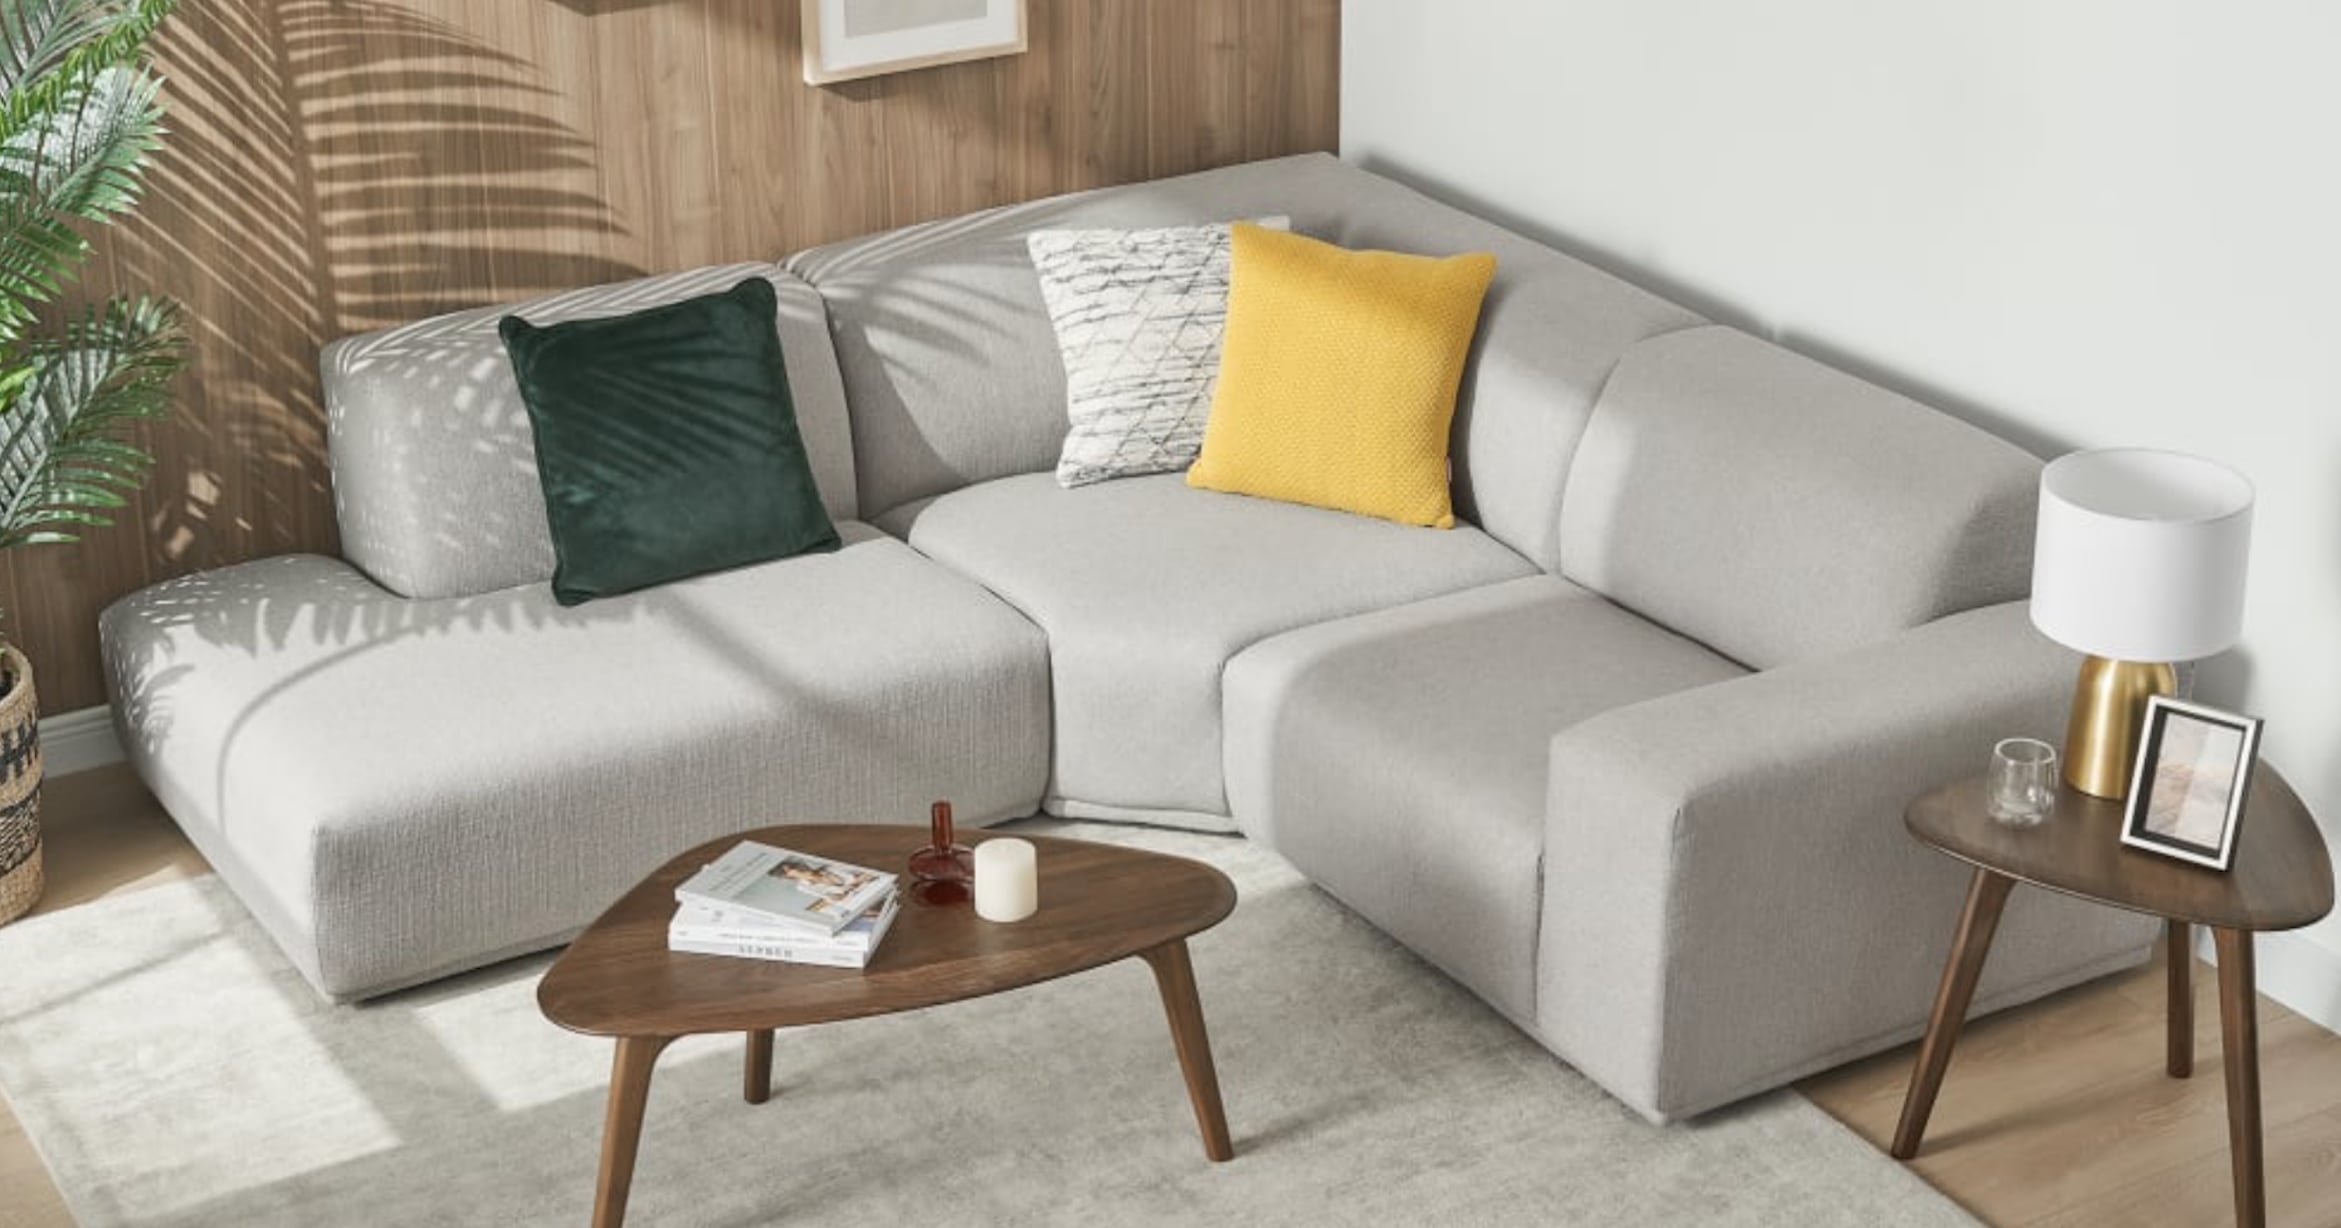 Best Apartment Furniture 2022 | POPSUGAR Home